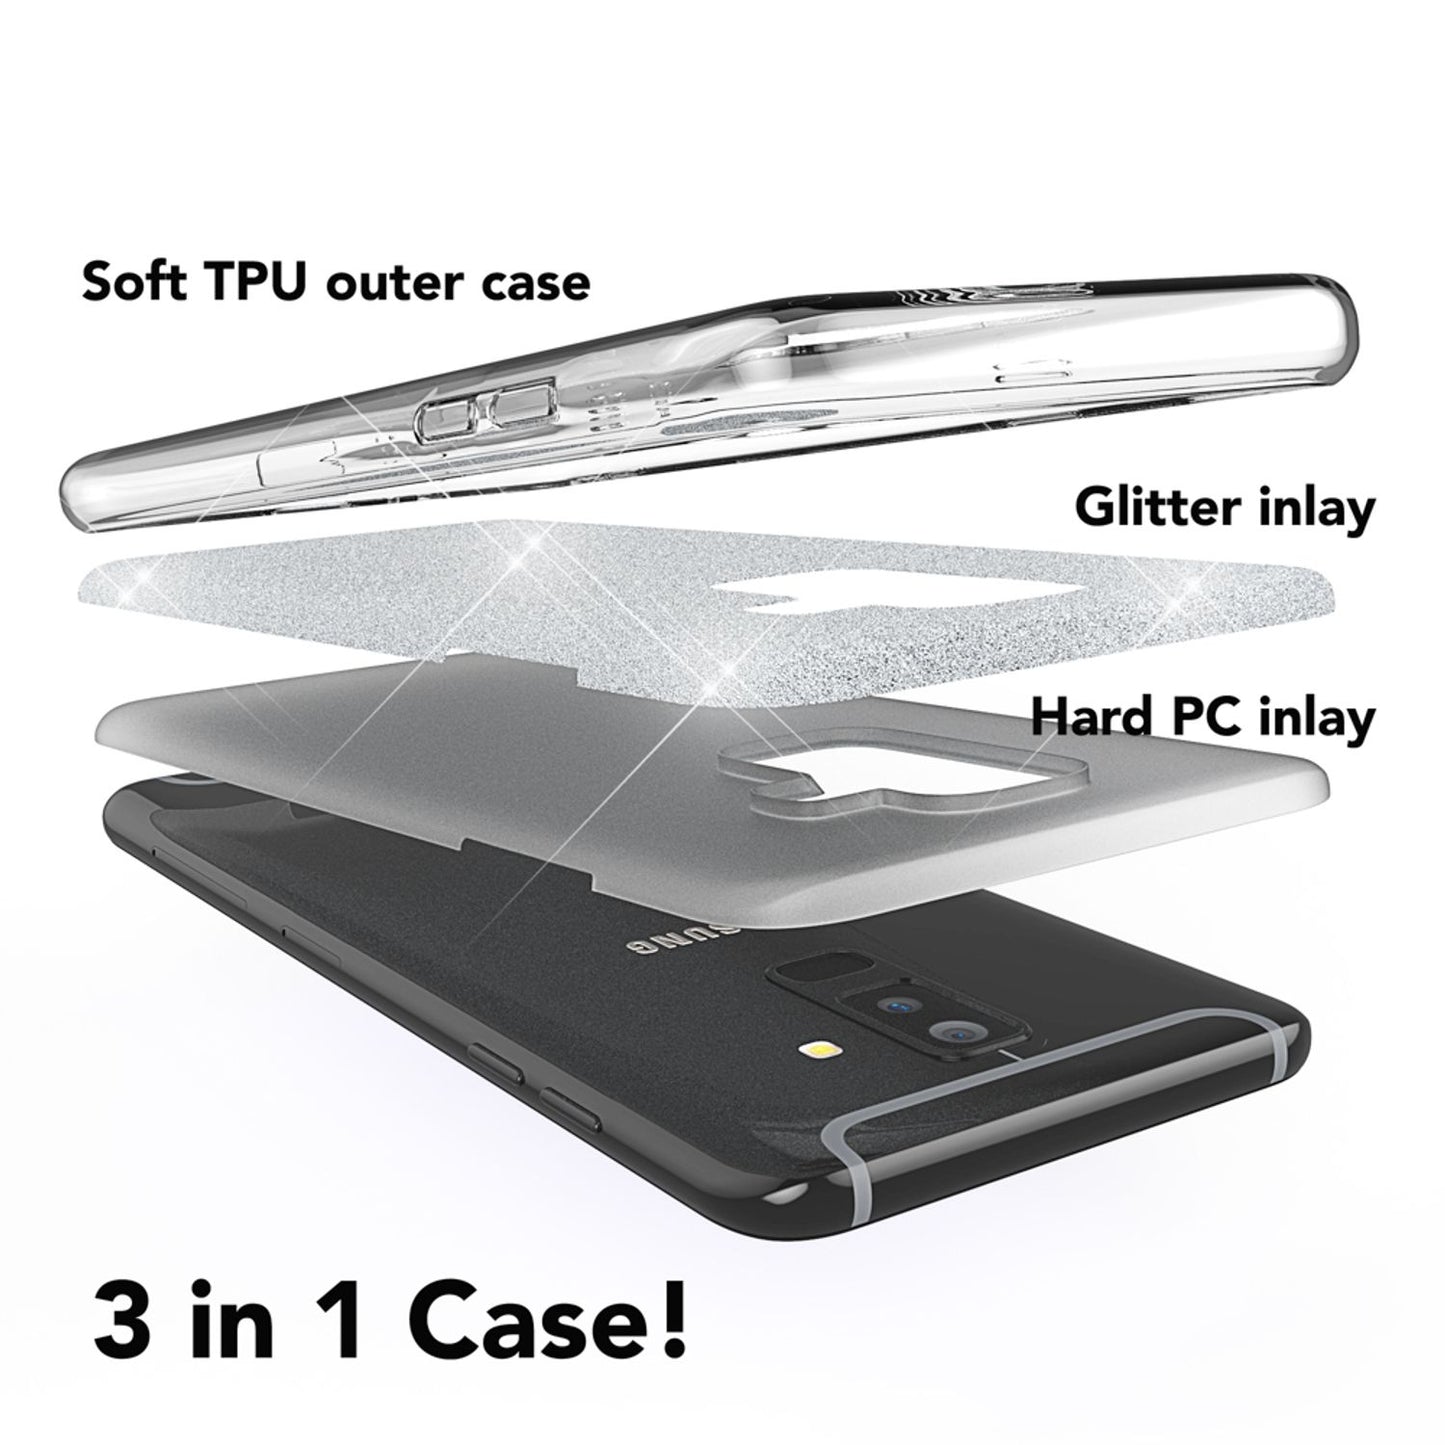 Samsung Galaxy A6 Plus Handy Hülle von NALIA, Glitzer Ultra-Slim Case Cover